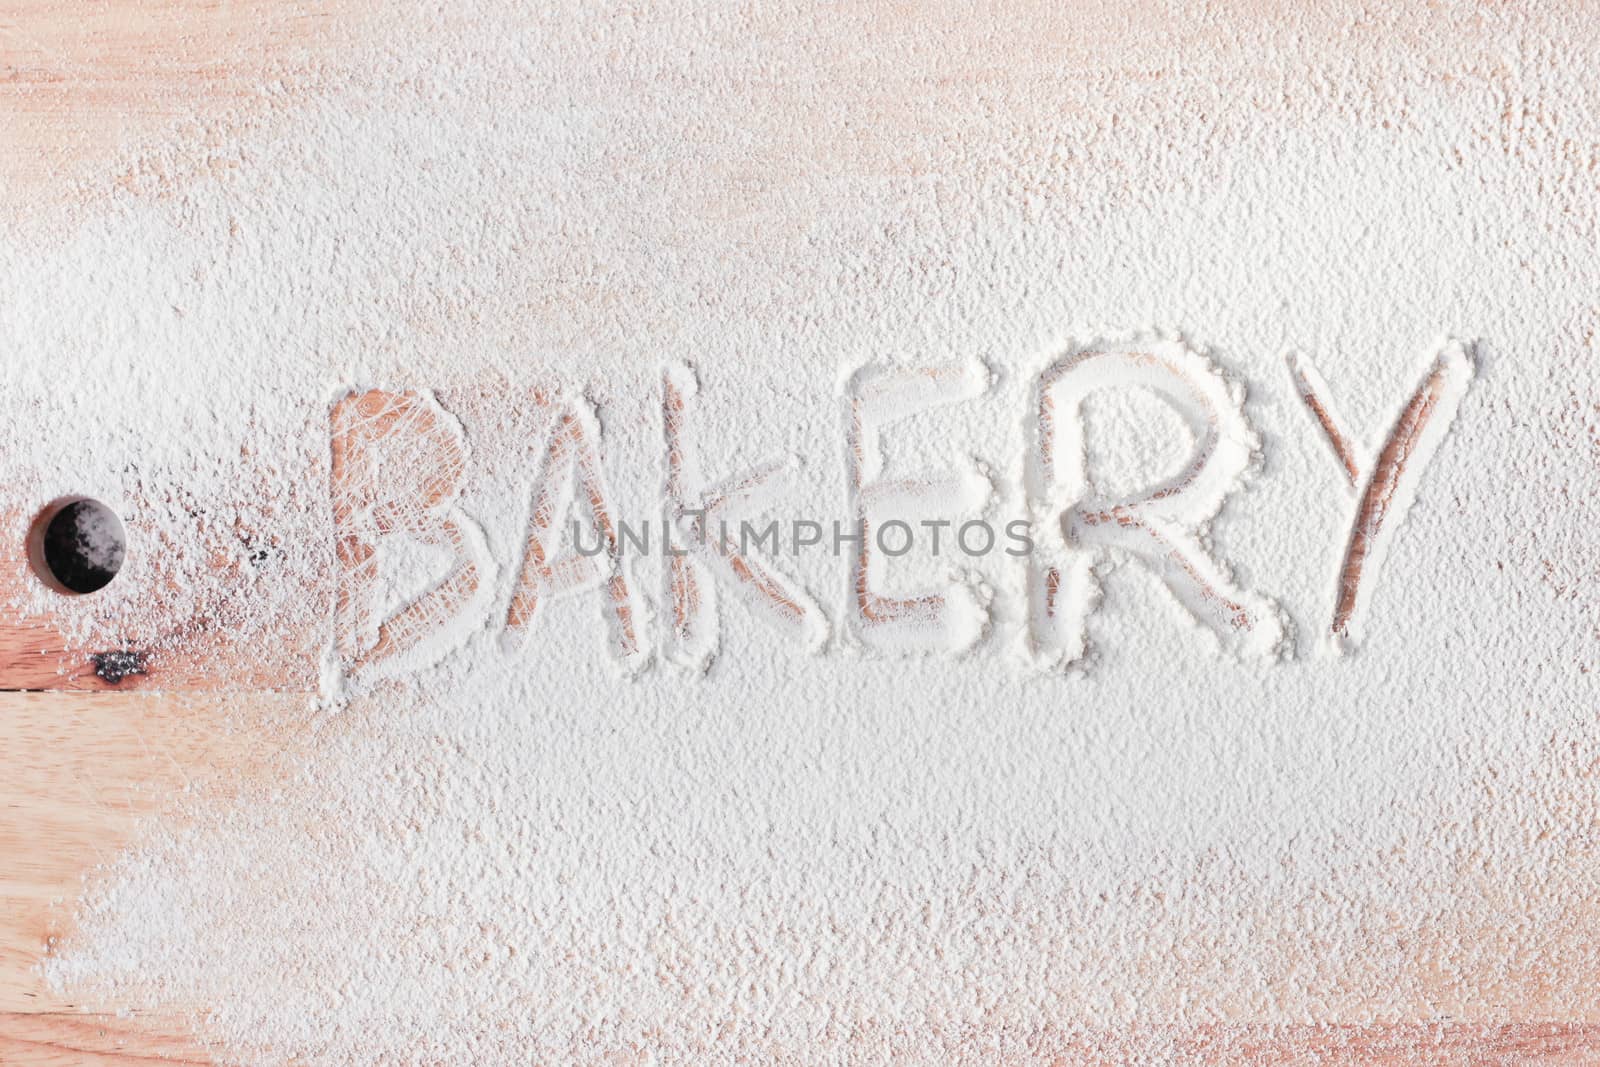 Bakery written in flour on a wooden surface